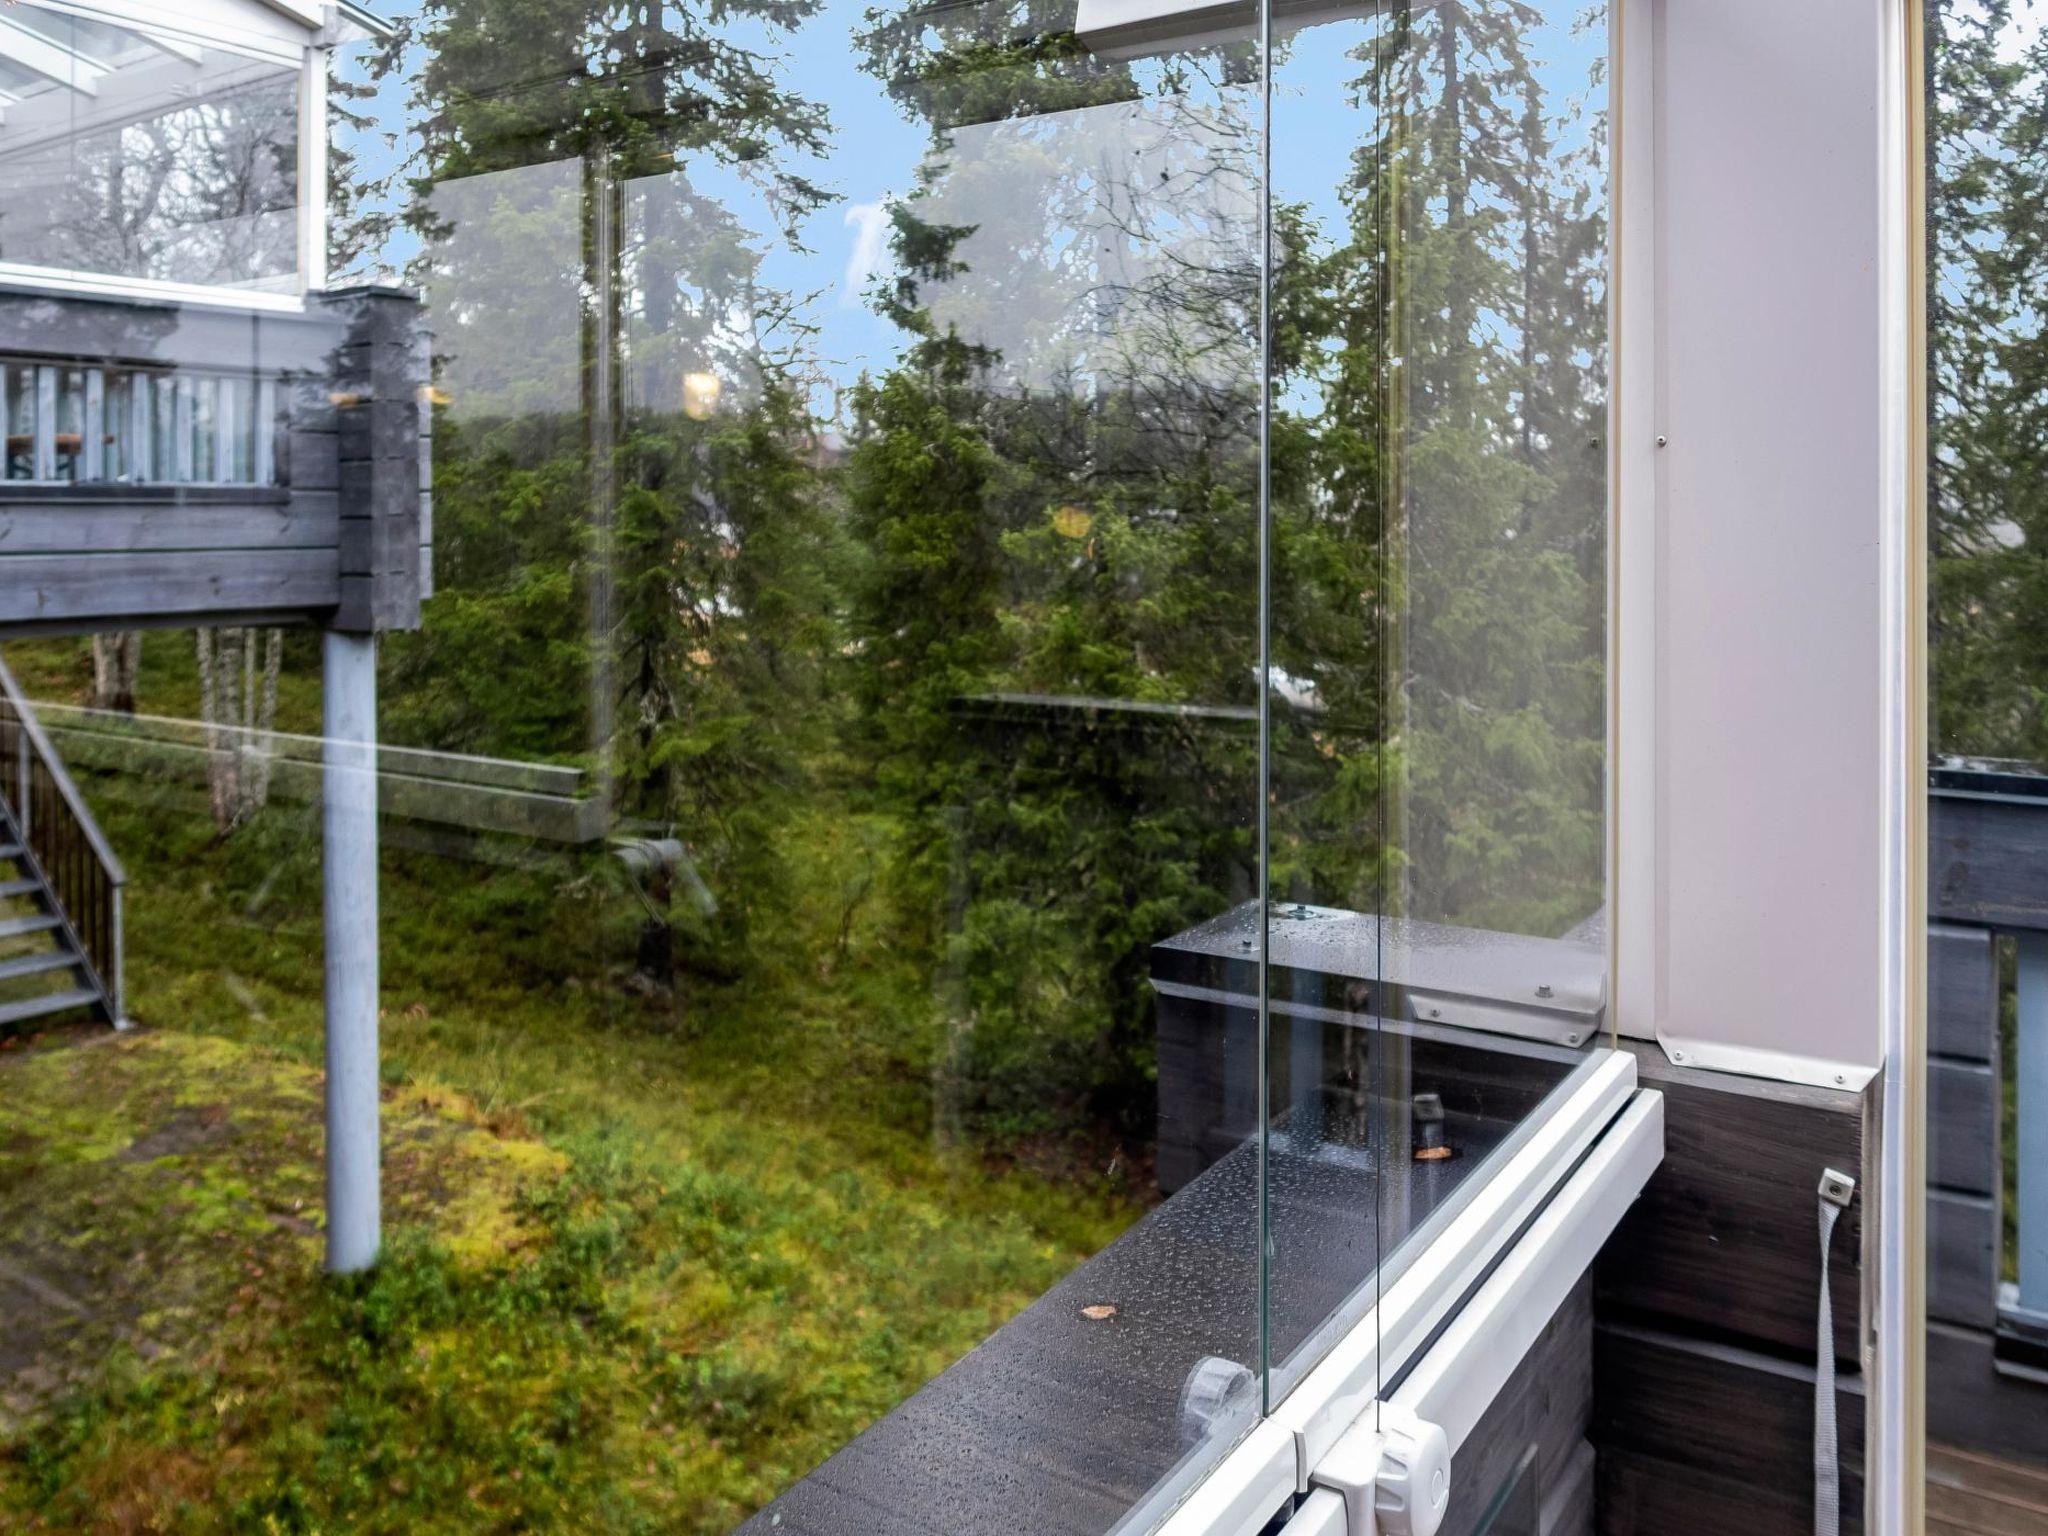 Photo 20 - 2 bedroom House in Kuusamo with sauna and mountain view